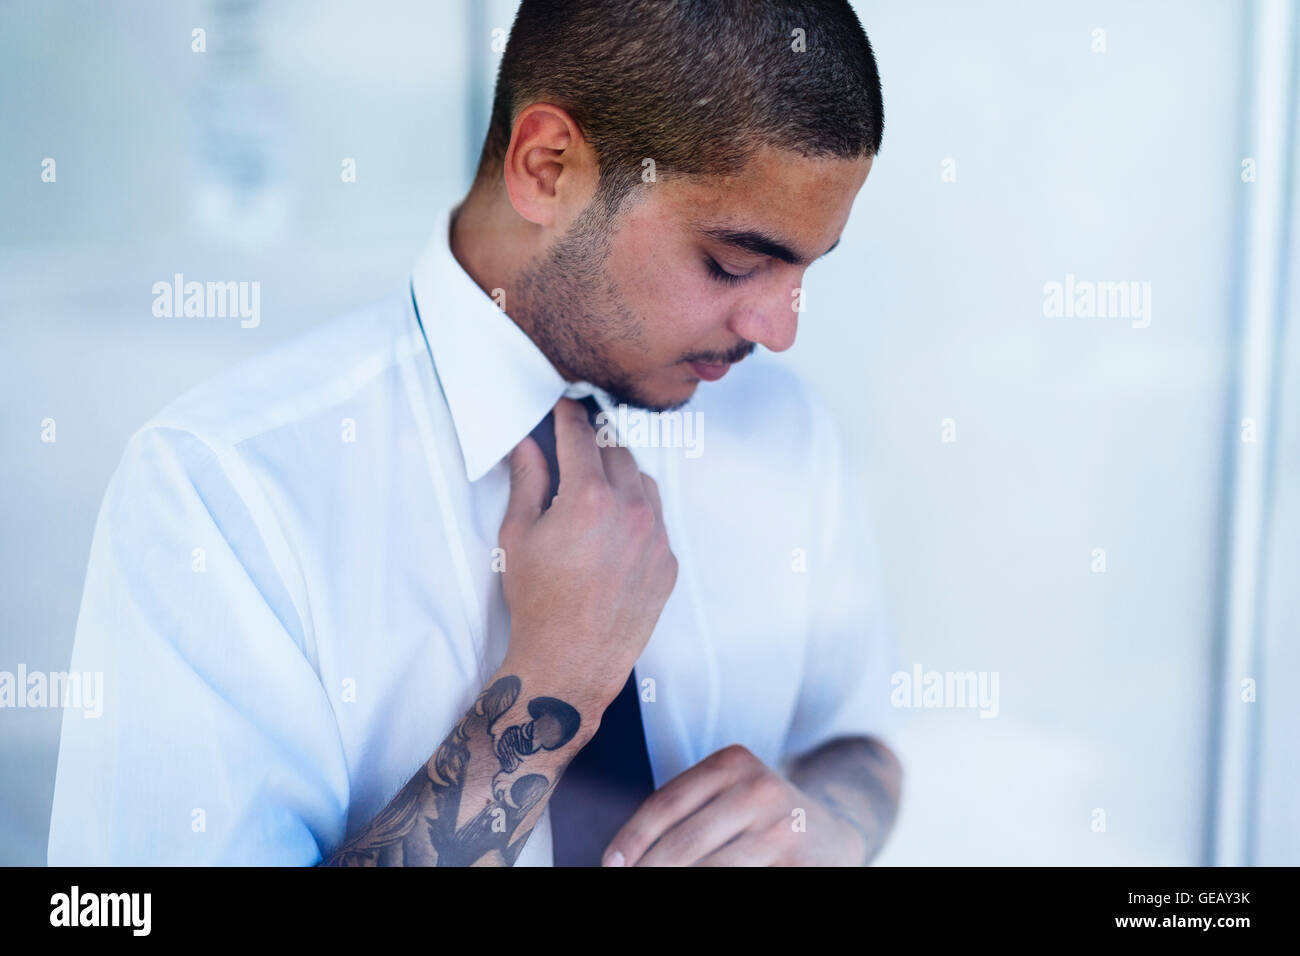 Young businessman binding tie Stock Photo